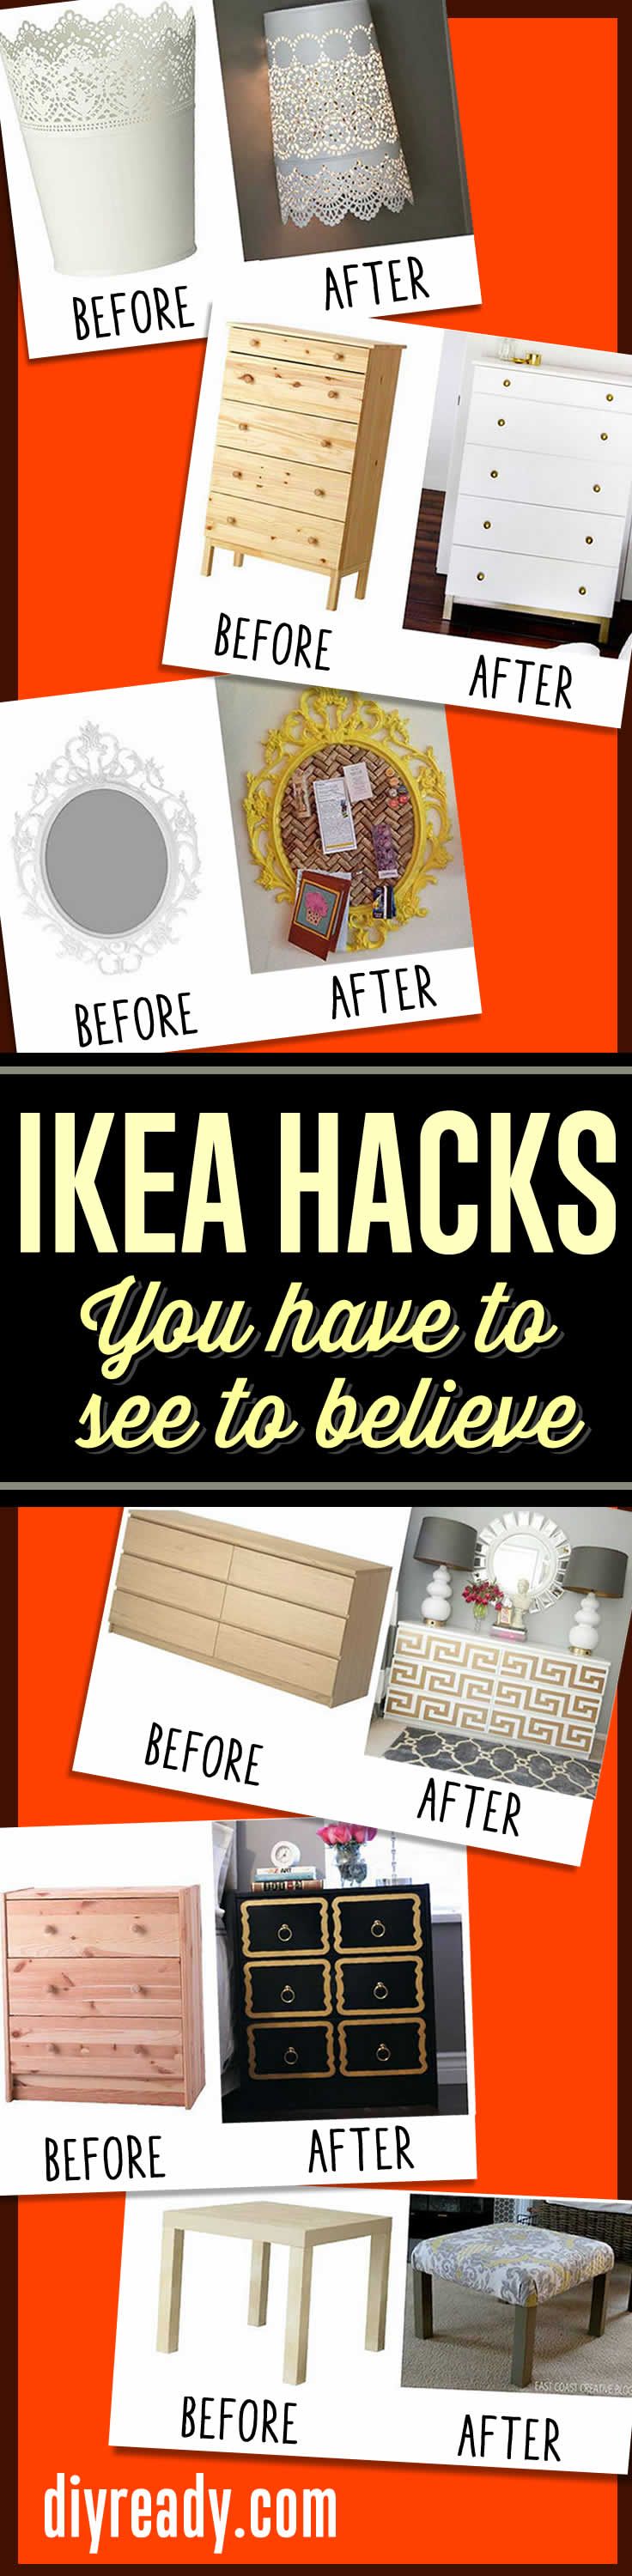 IKEA hack ideas - IKEA furniture hacks you have to see to believe! #diy #furnitu...